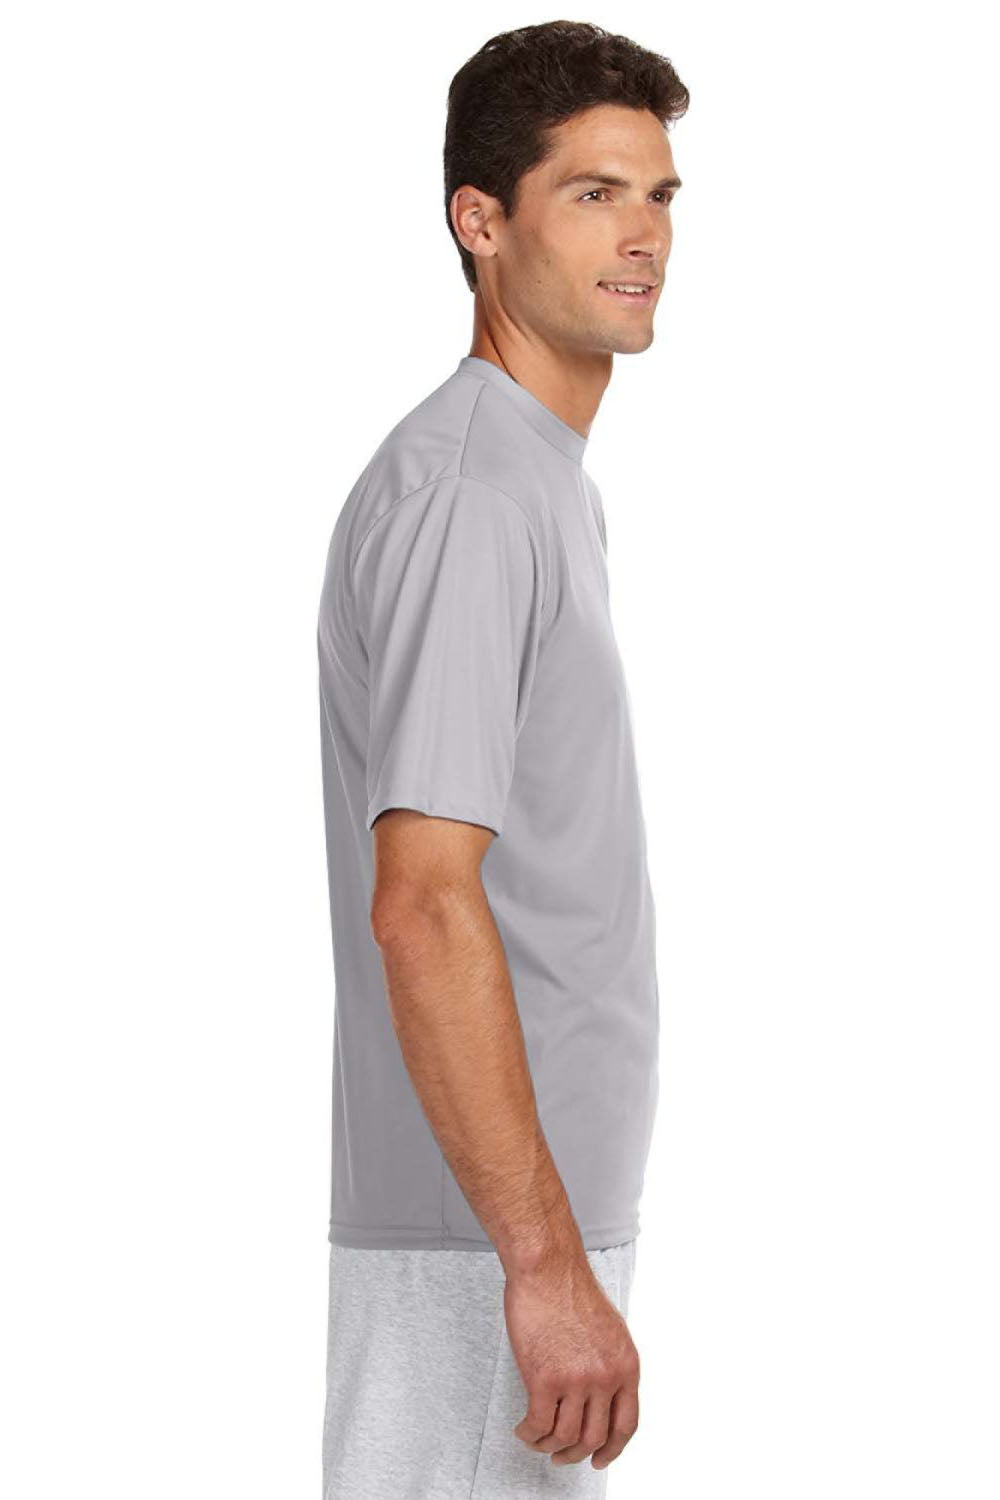 A4 N3142 Mens Performance Moisture Wicking Short Sleeve Crewneck T-Shirt Silver Grey Model Side